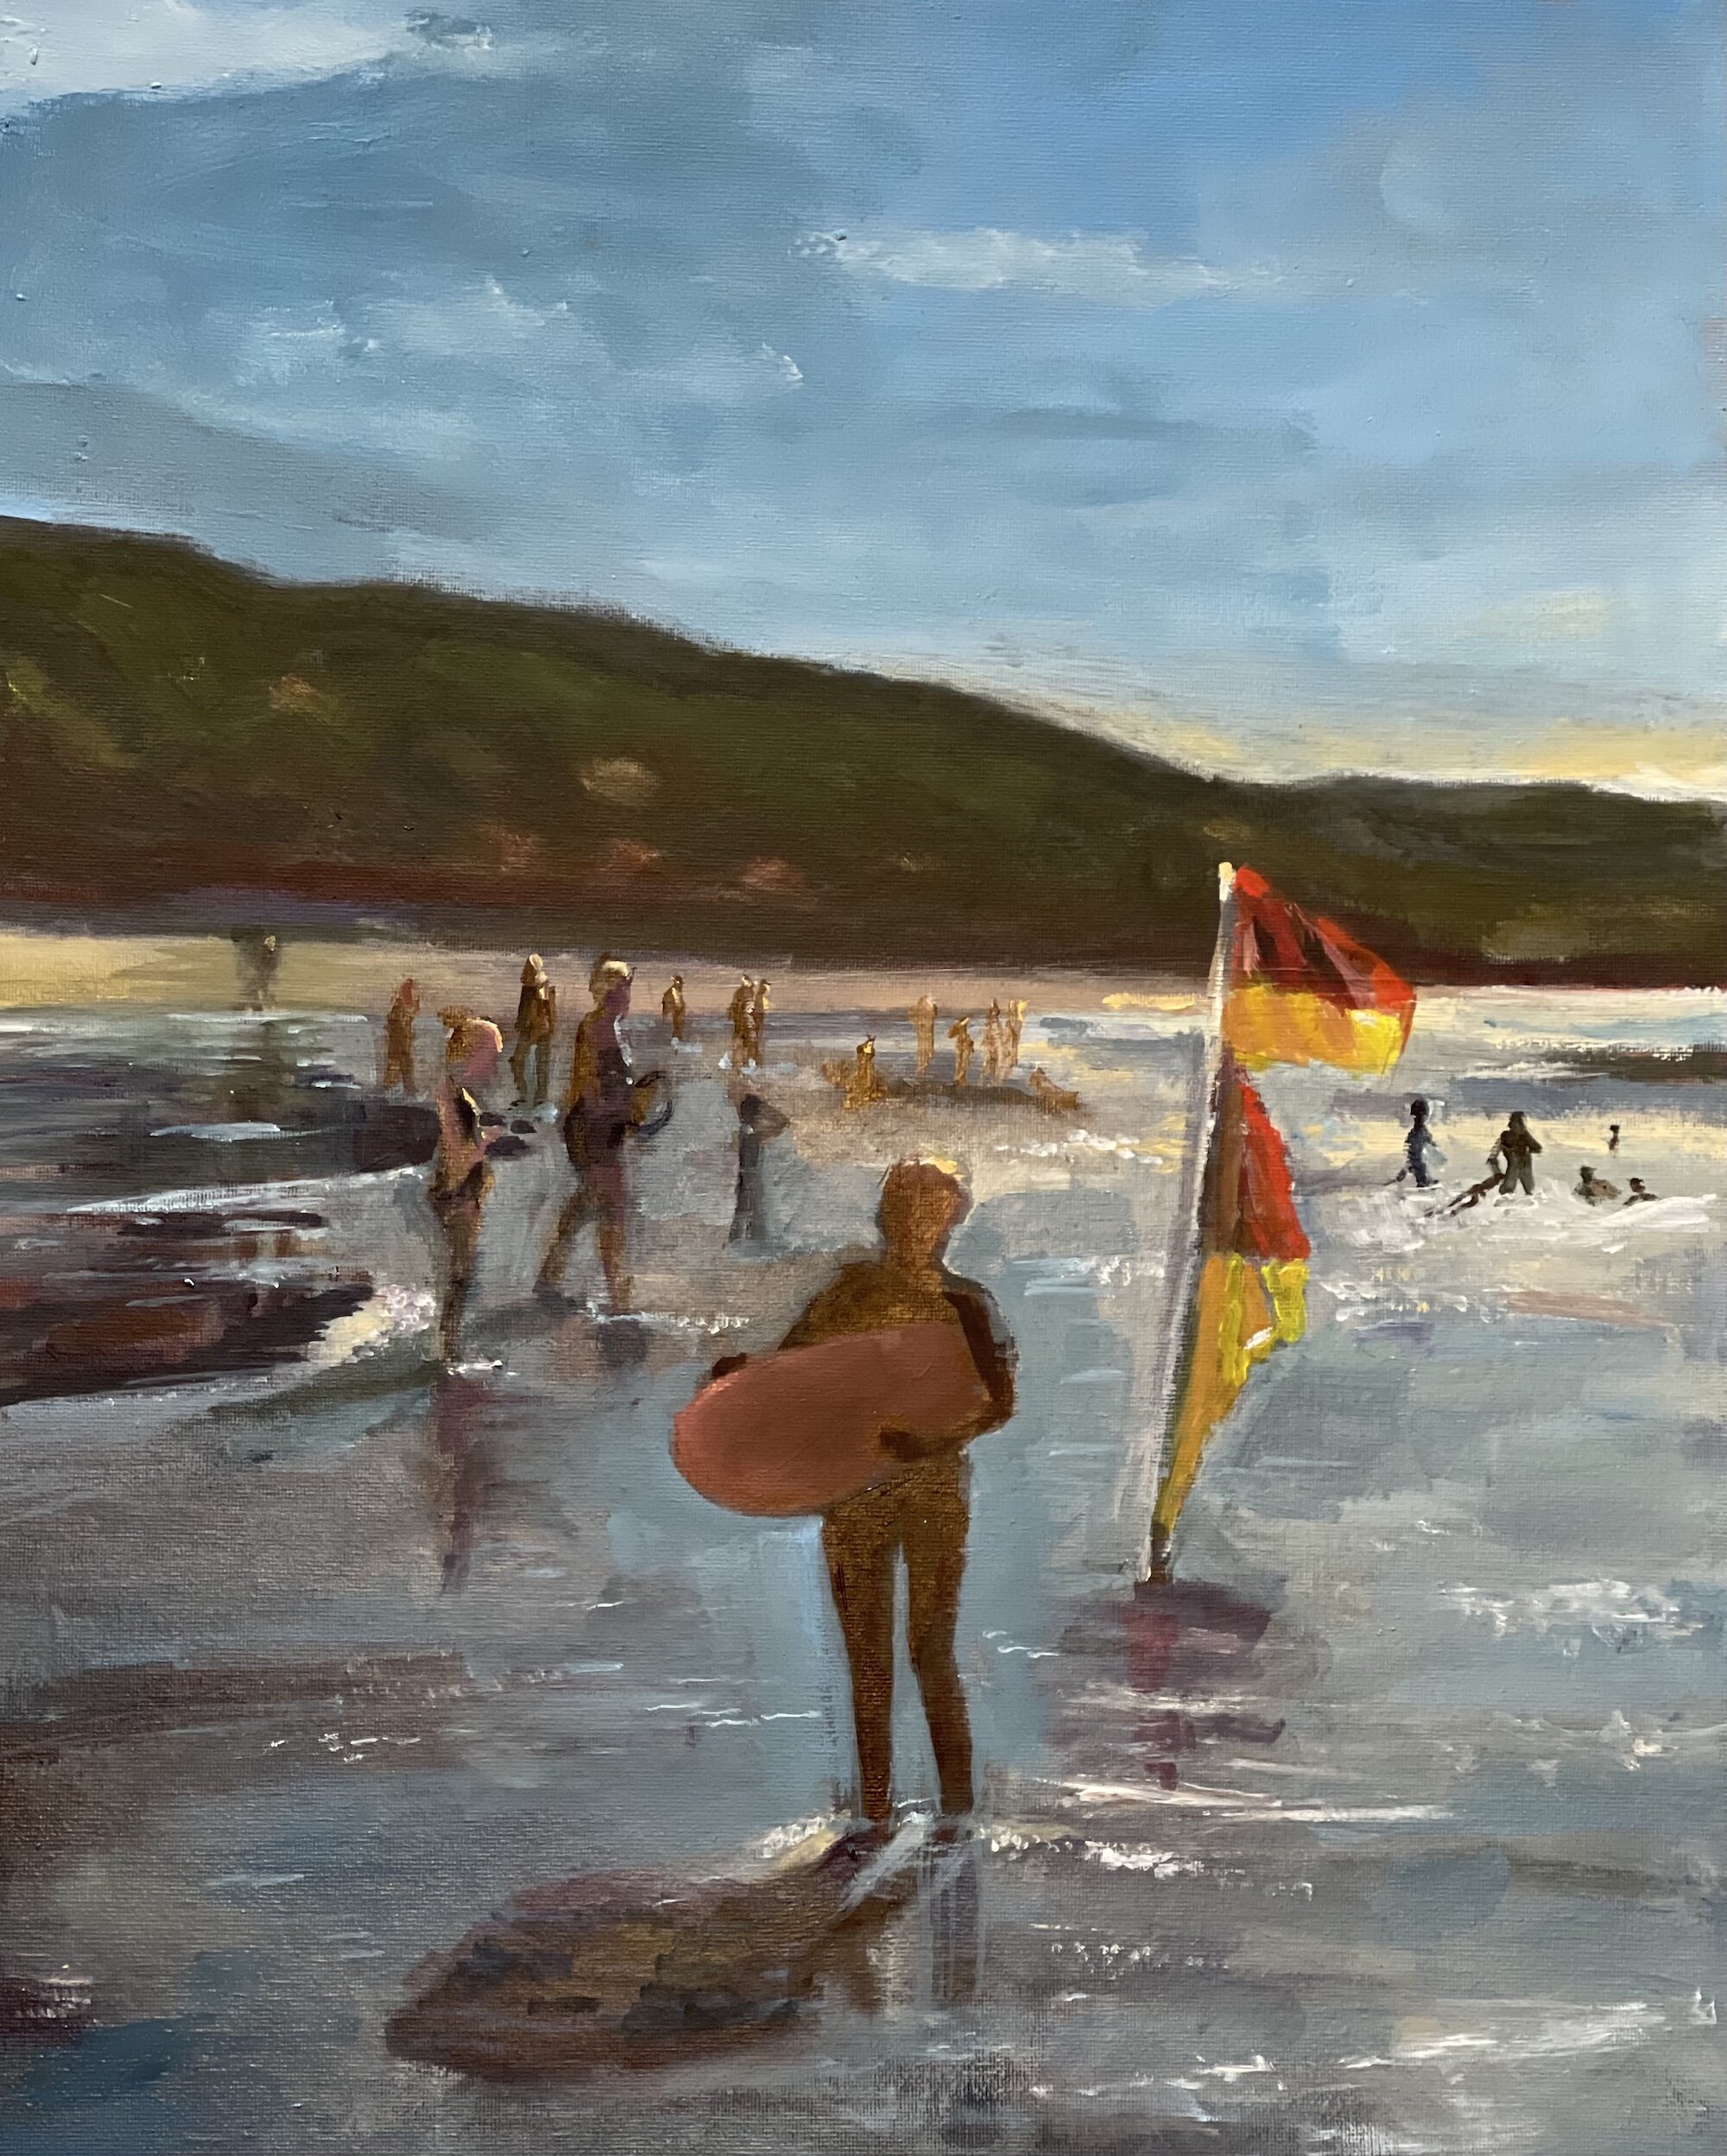  Surfers at sundown, oil on canvas board, 40x50cm 